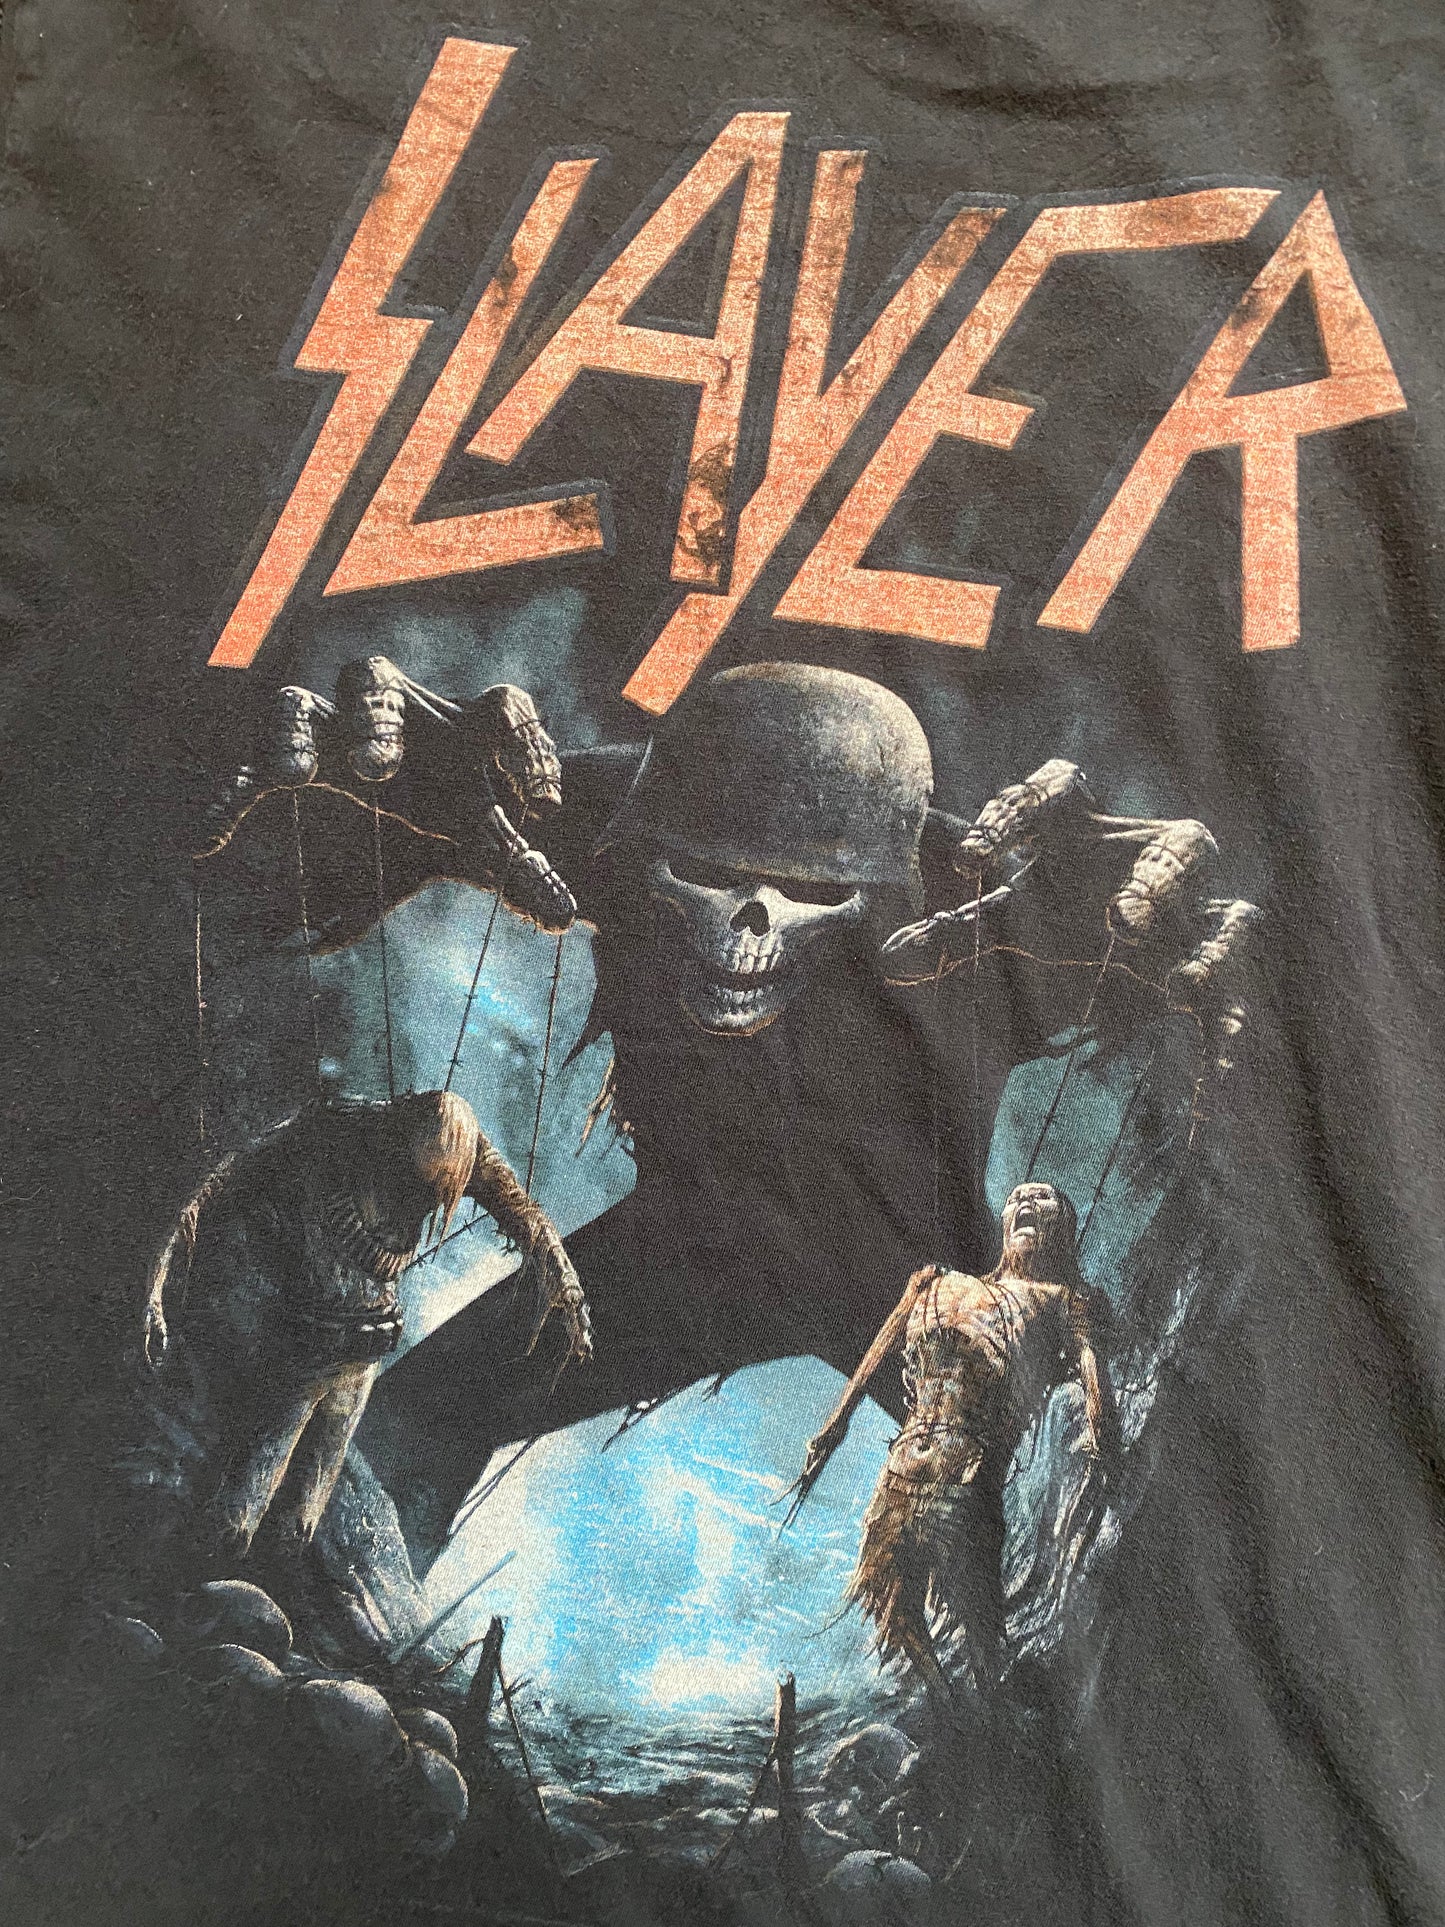 Slayer Cut Off T-Shirt